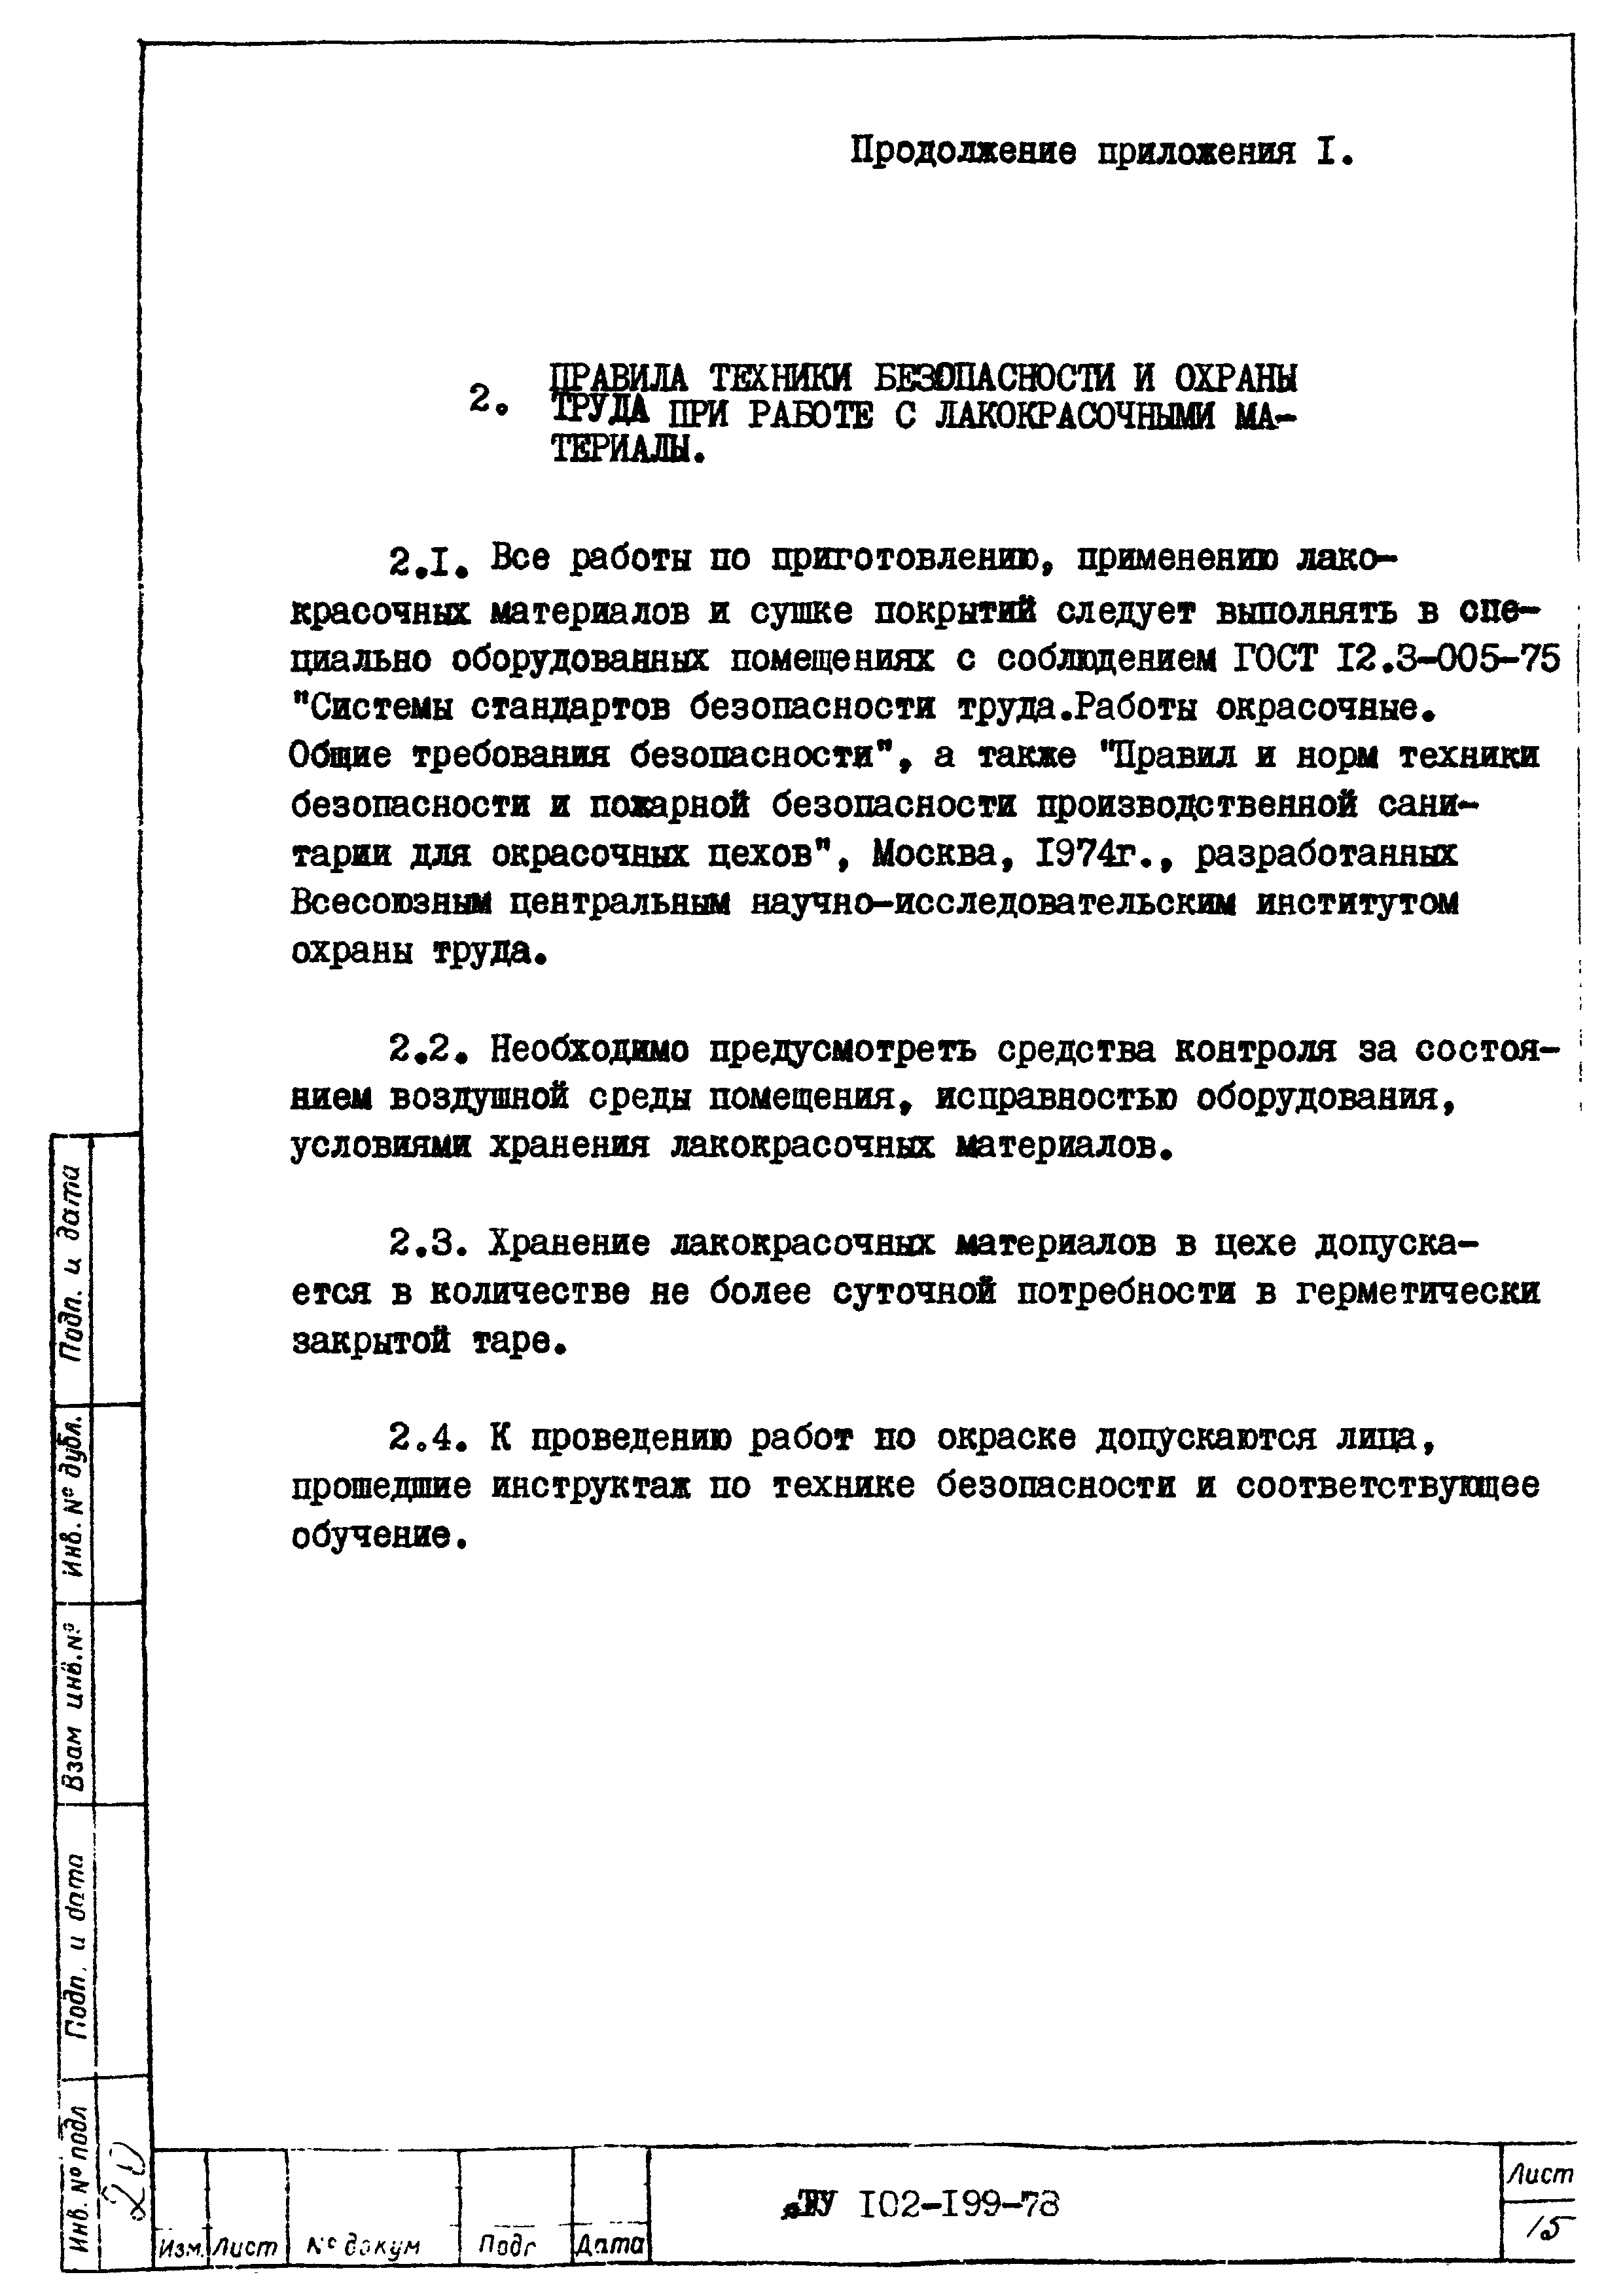 ТУ 102-199-78